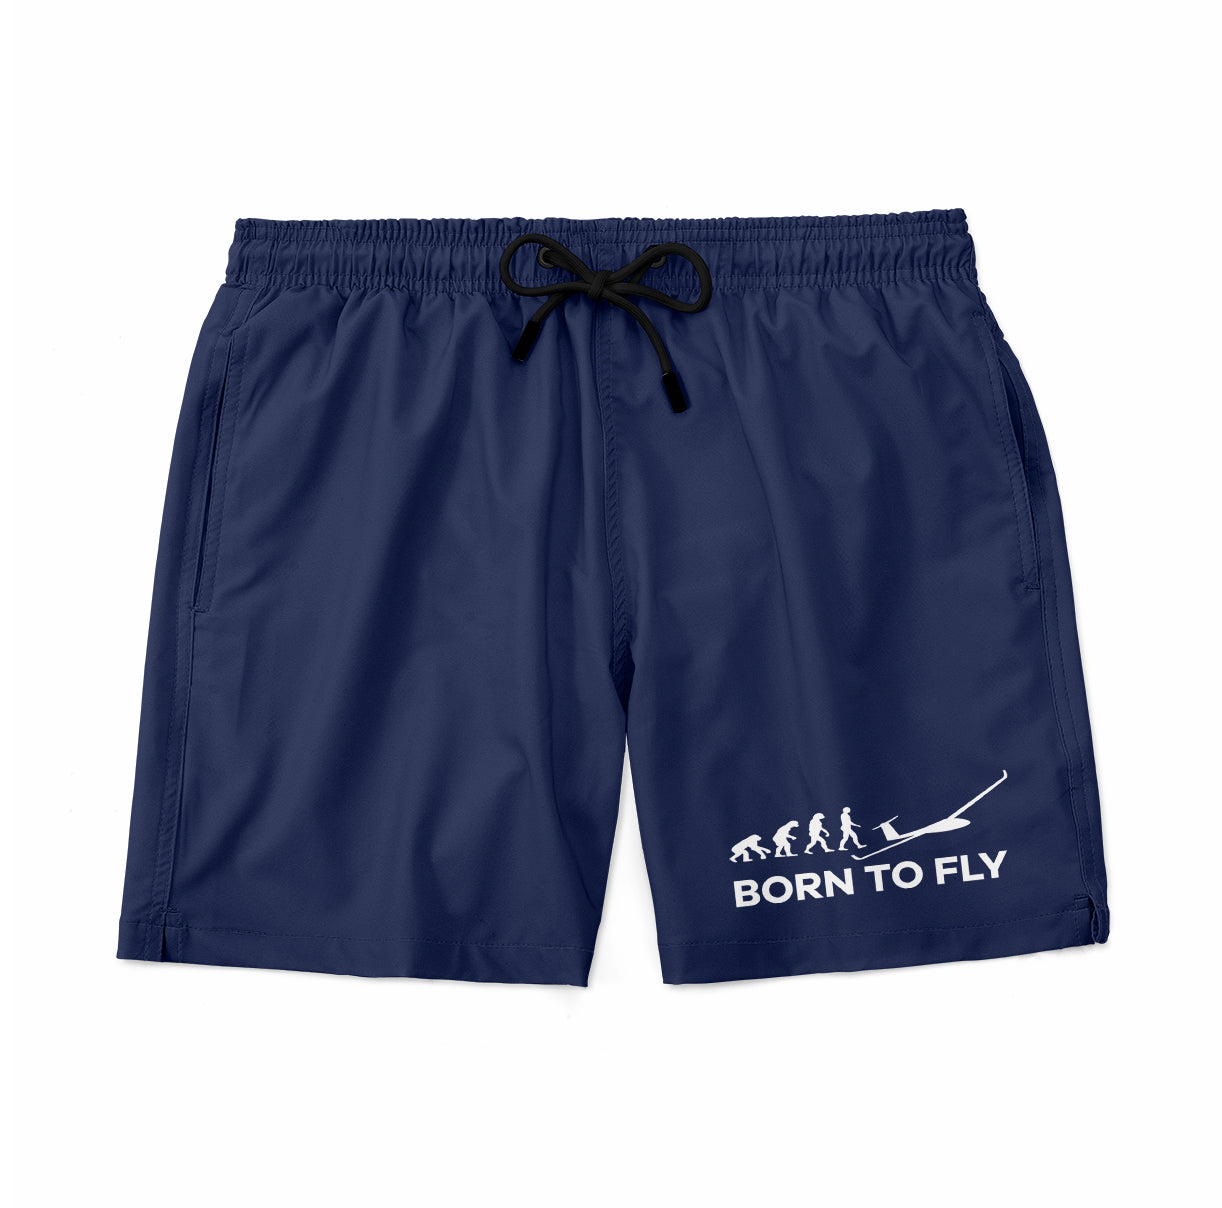 Born To Fly Glider Designed Swim Trunks & Shorts